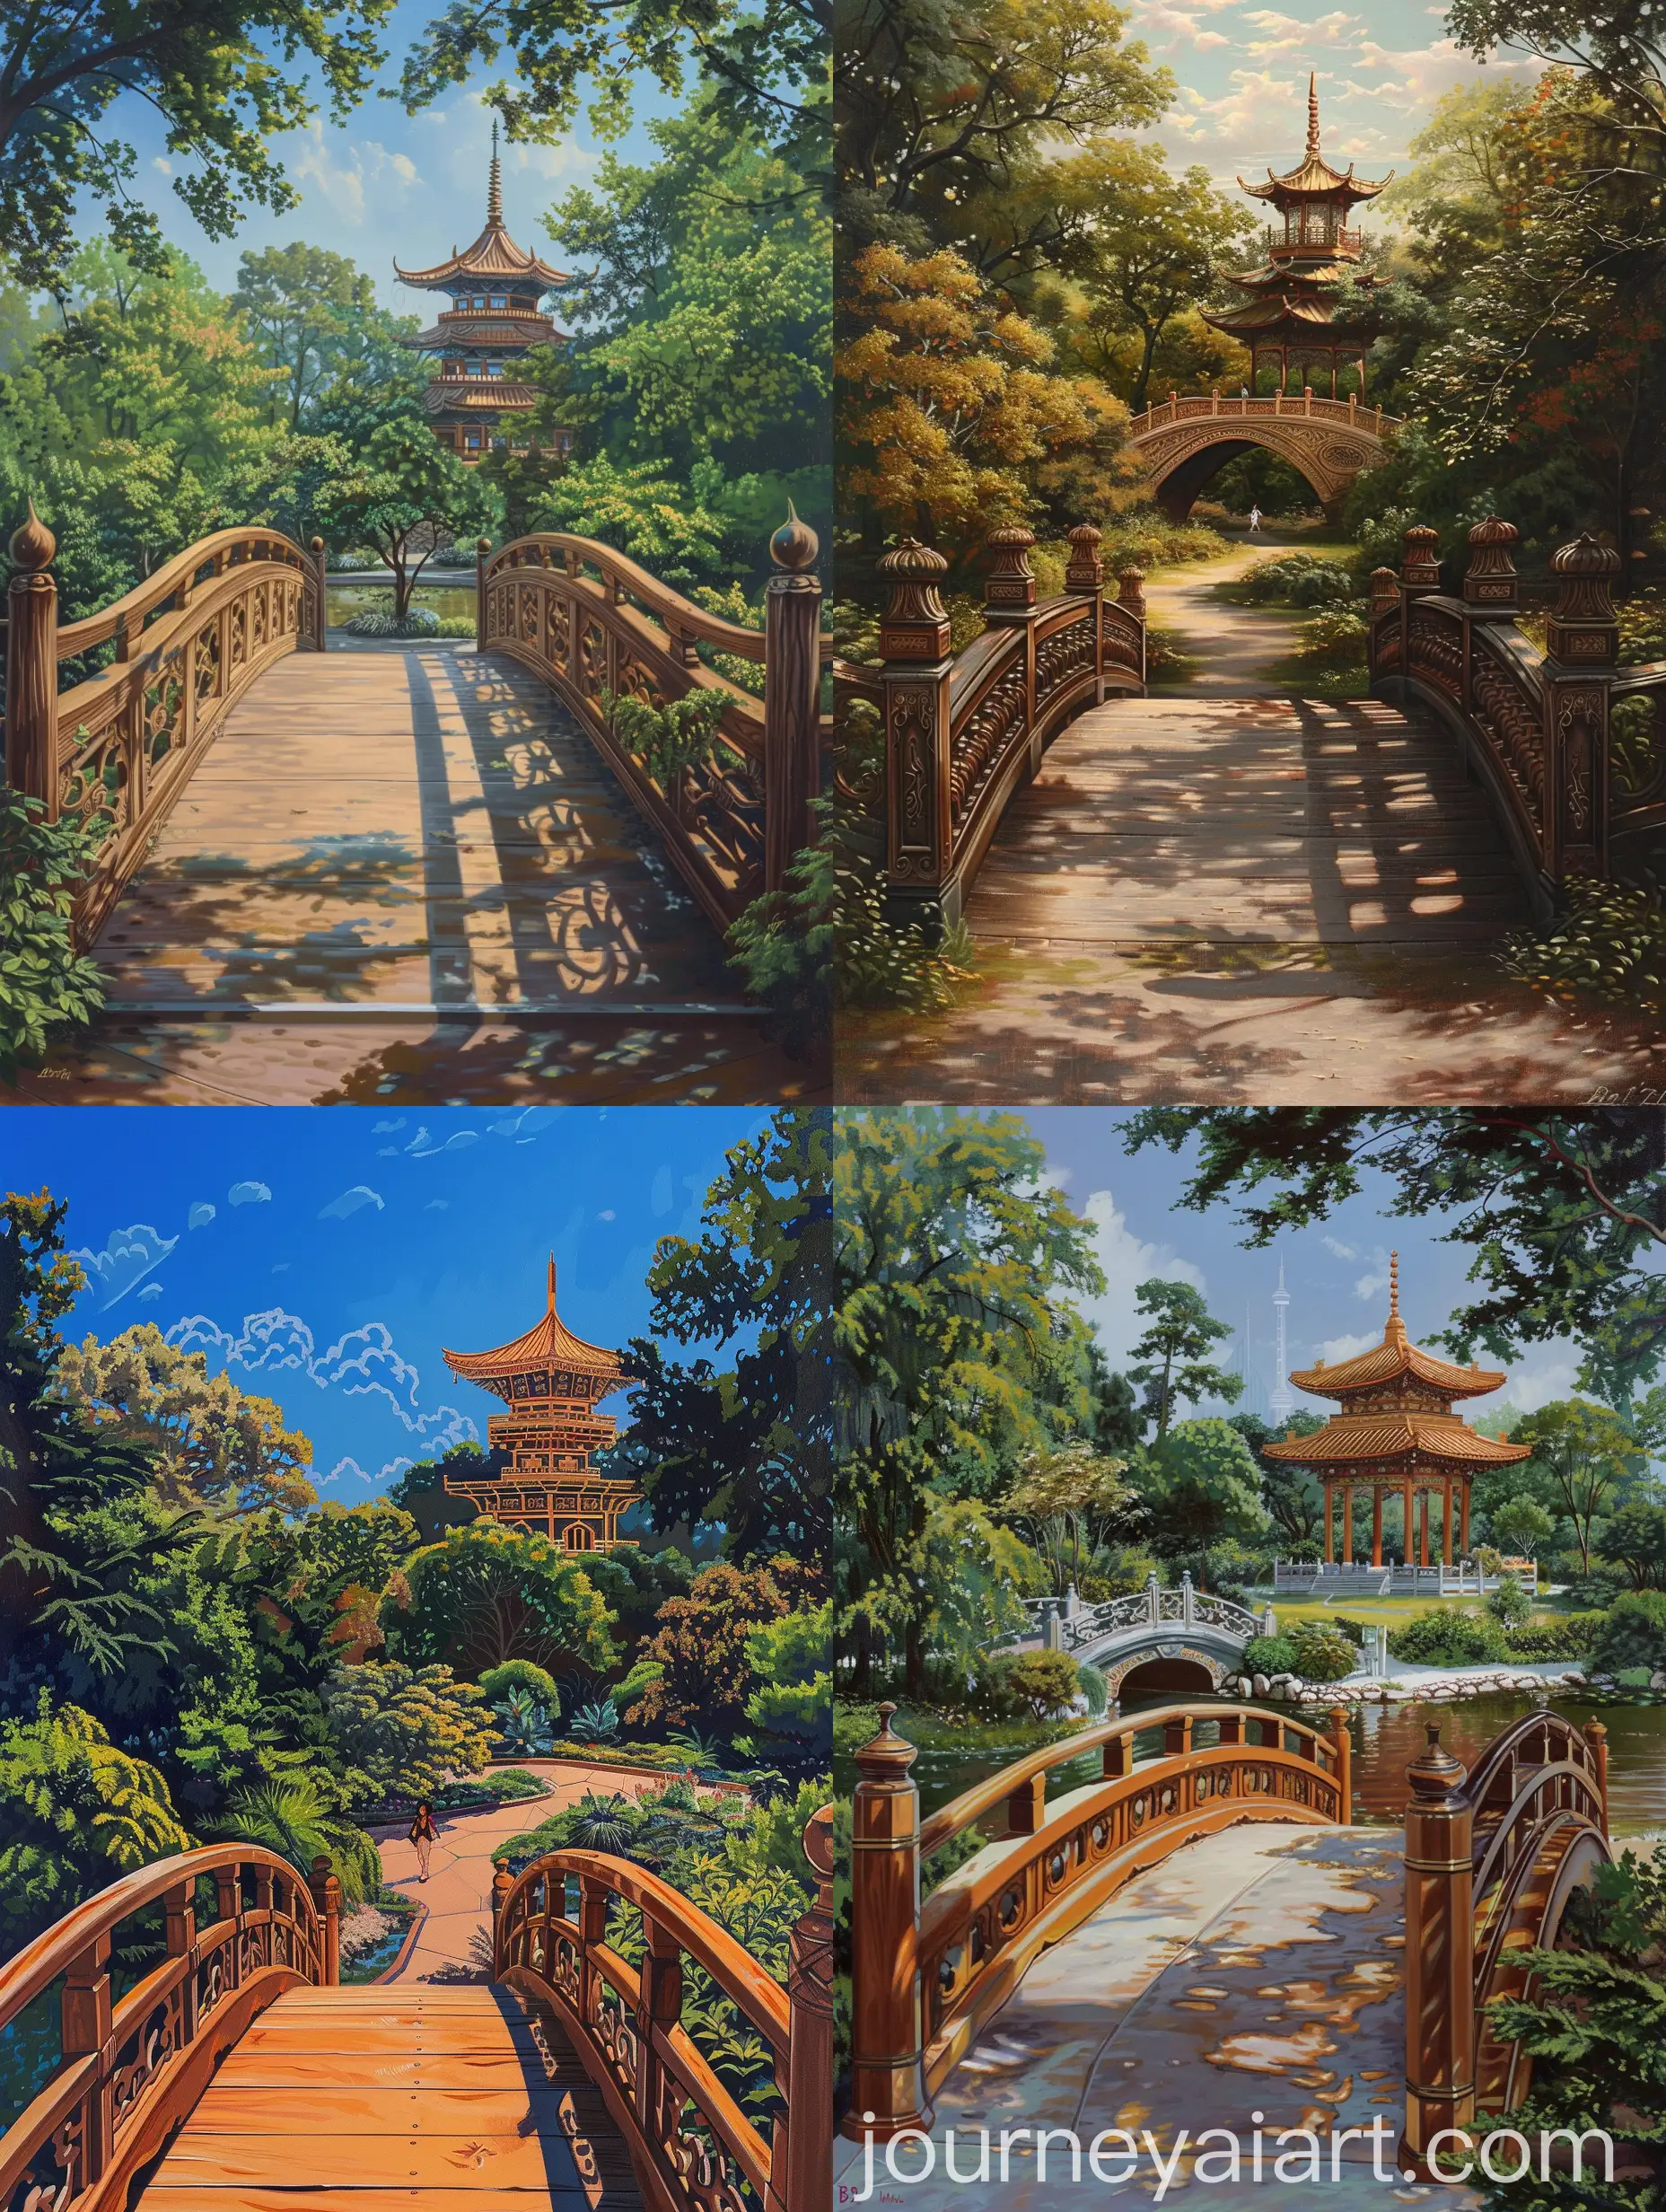 HyperRealistic-Anime-Bridge-in-Park-with-Pagoda-Garden-Utopia